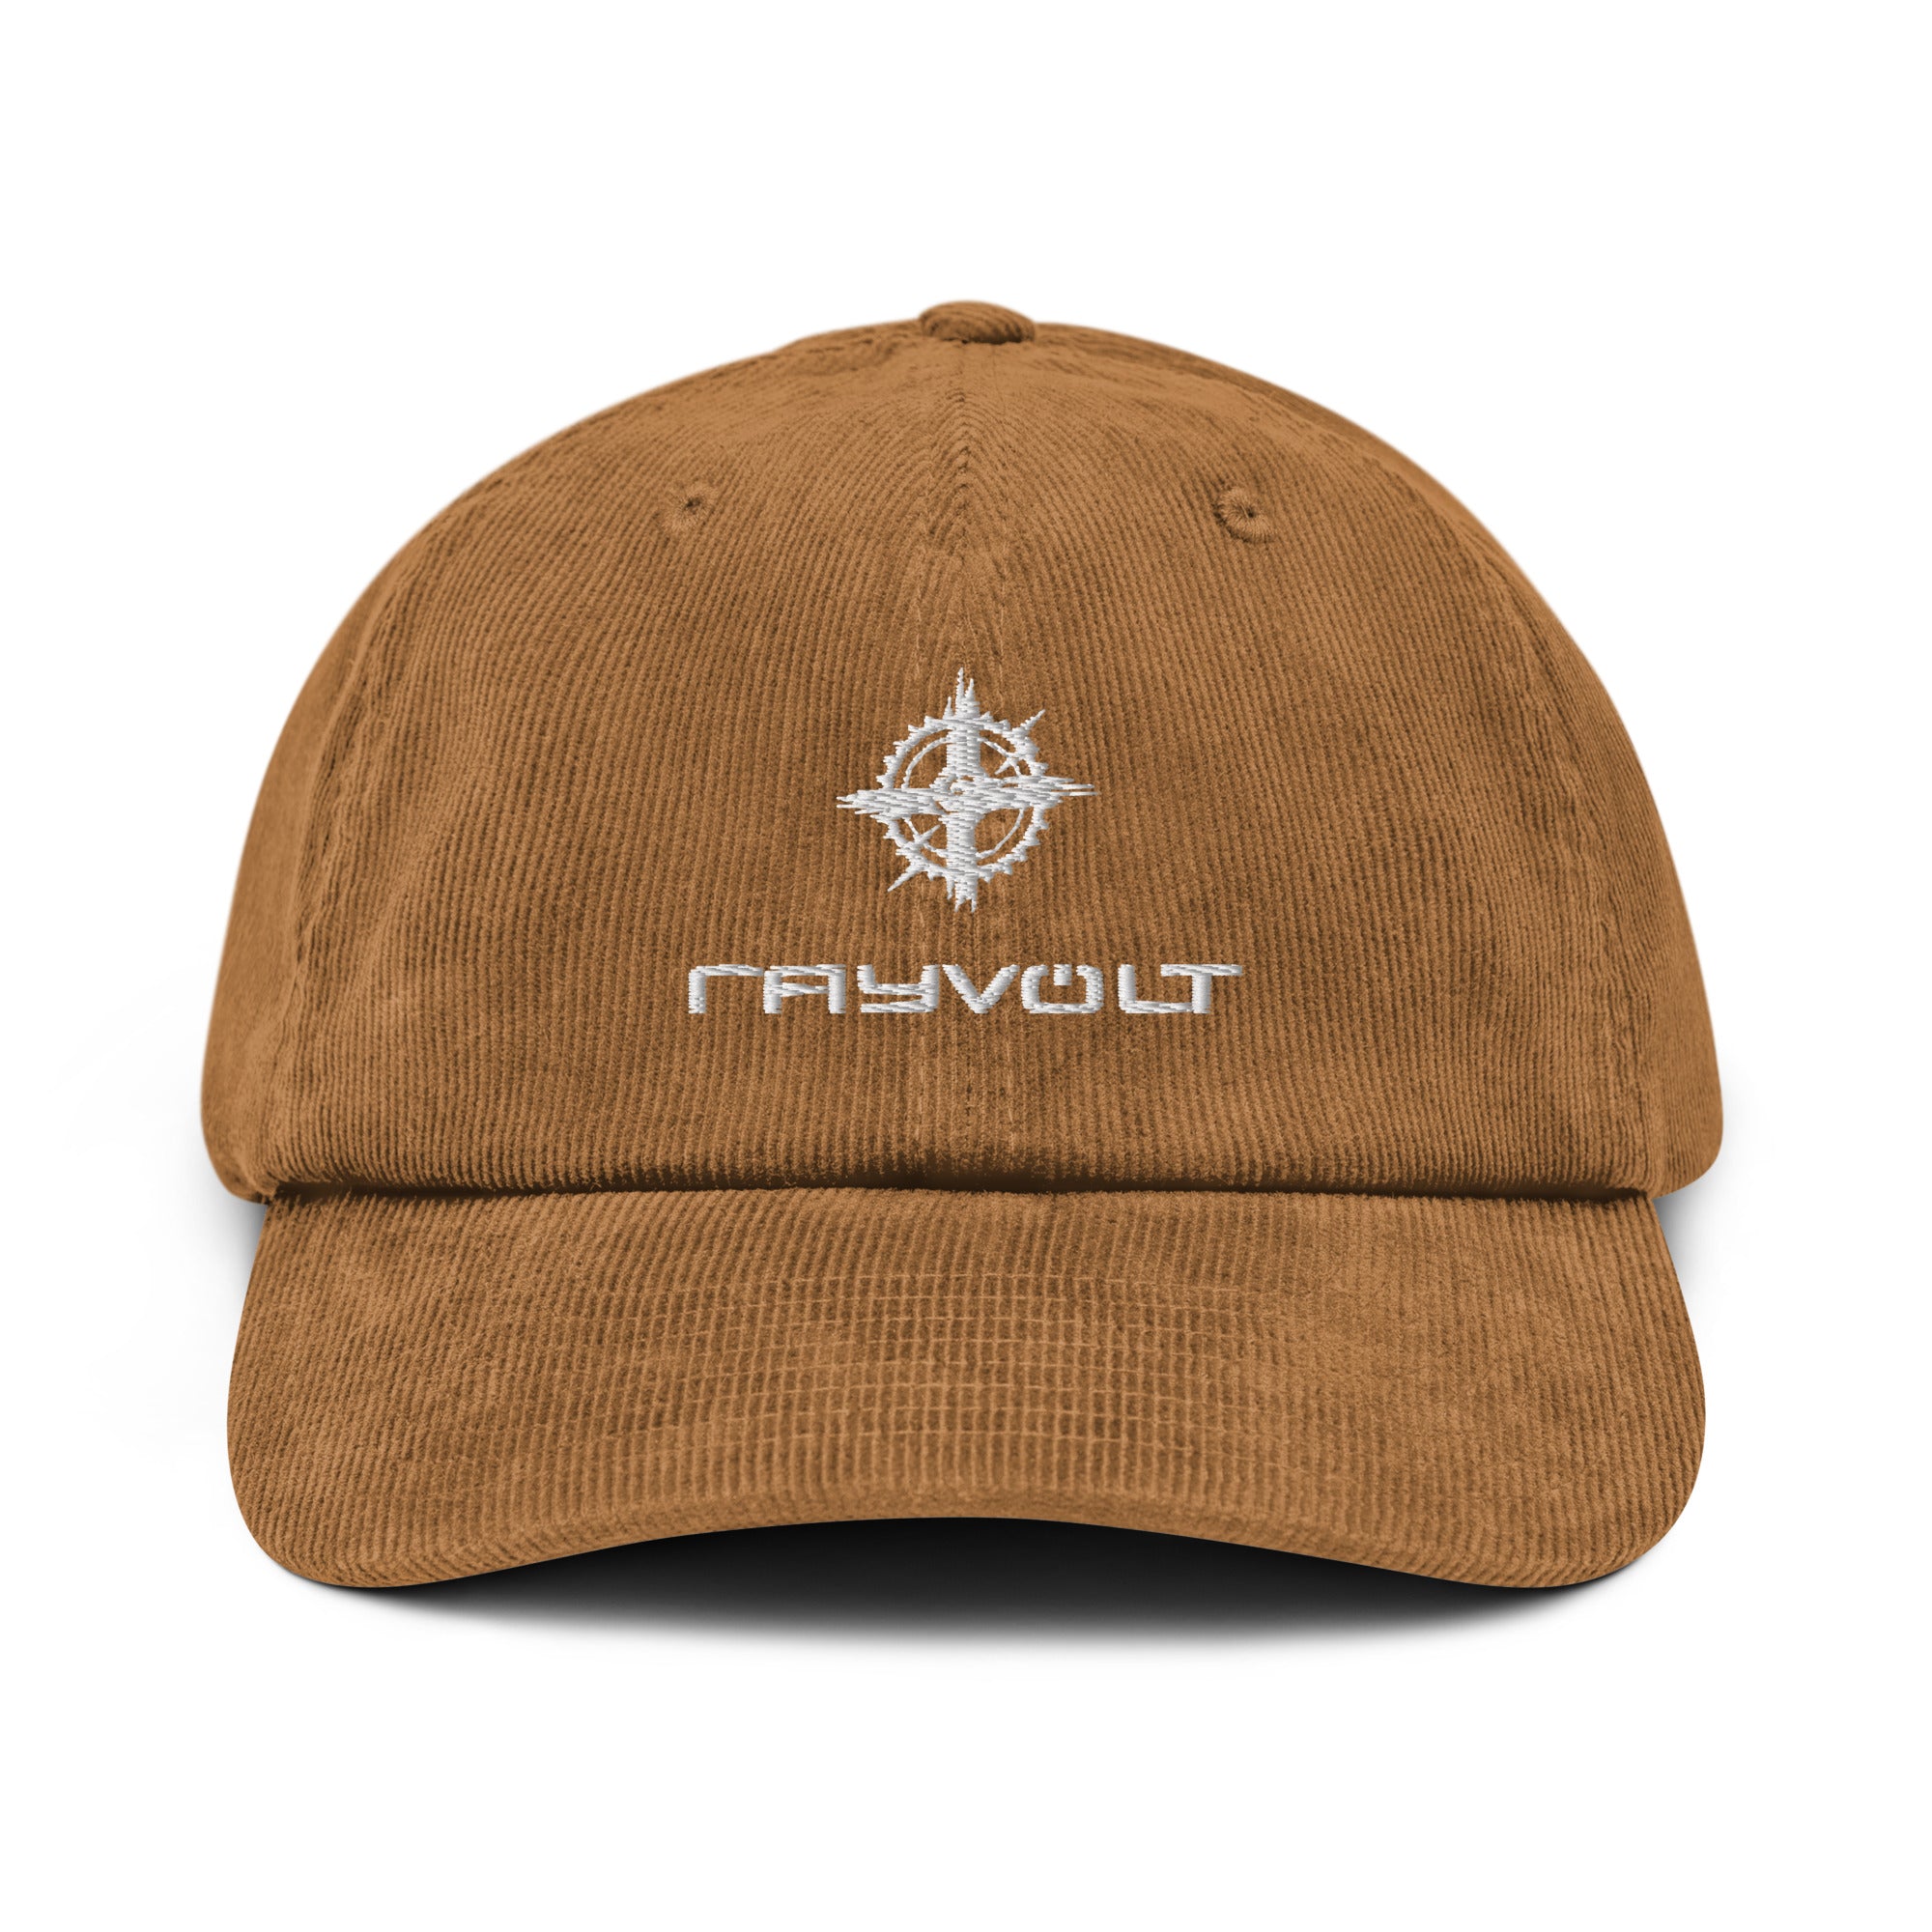 Rayvolt Corduroy hat